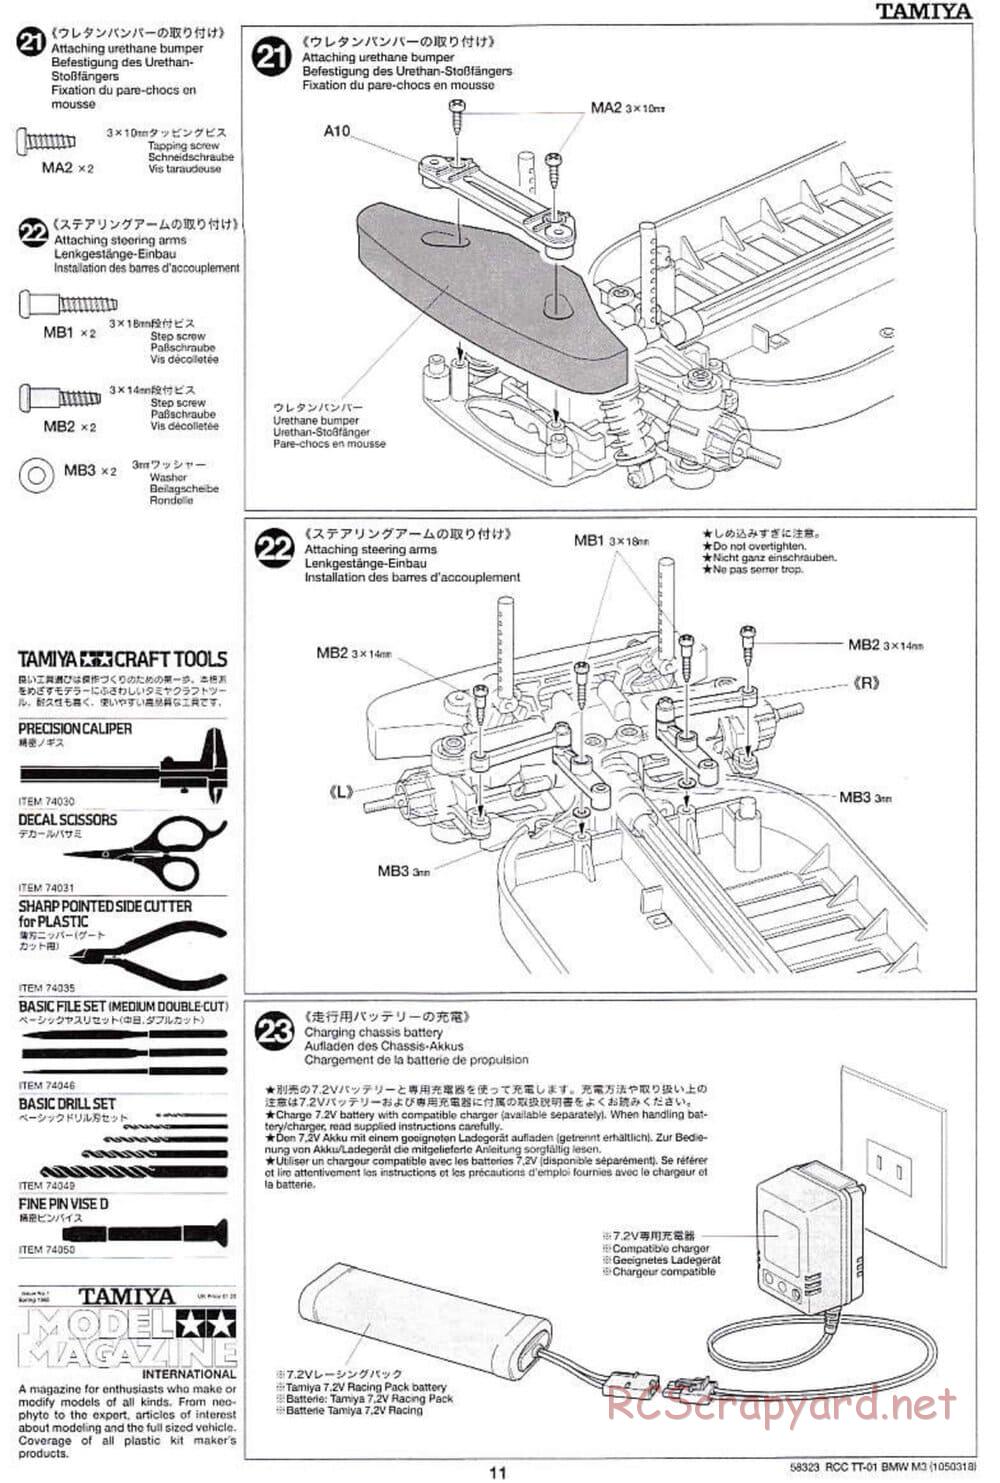 Tamiya - Schnitzer BMW M3 Sport Evo - TT-01 Chassis - Manual - Page 11